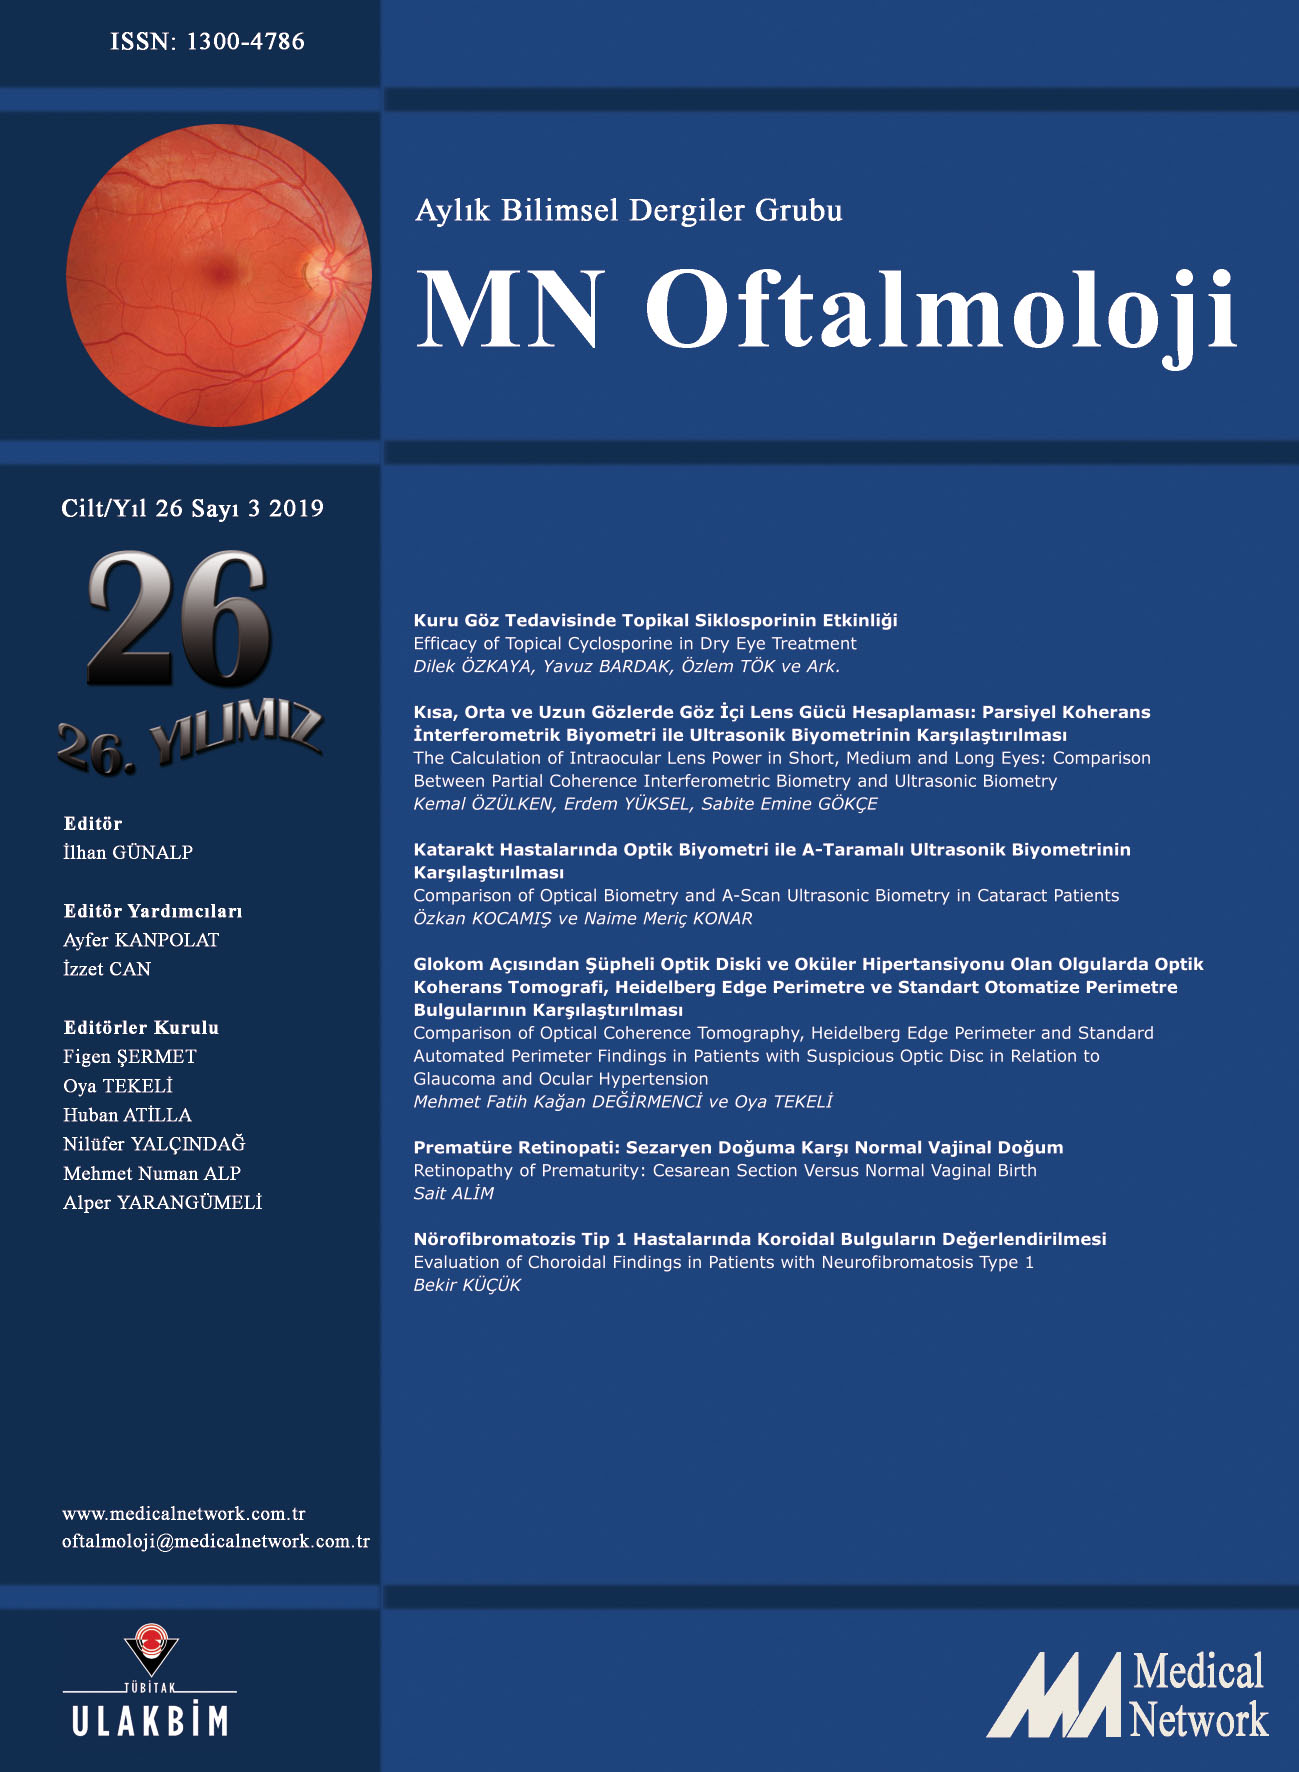 <p>MN Oftalmoloji Cilt: 26 Say: 3 2019 (MN Ophthalmology Volume: 26 No 3 2019)</p>